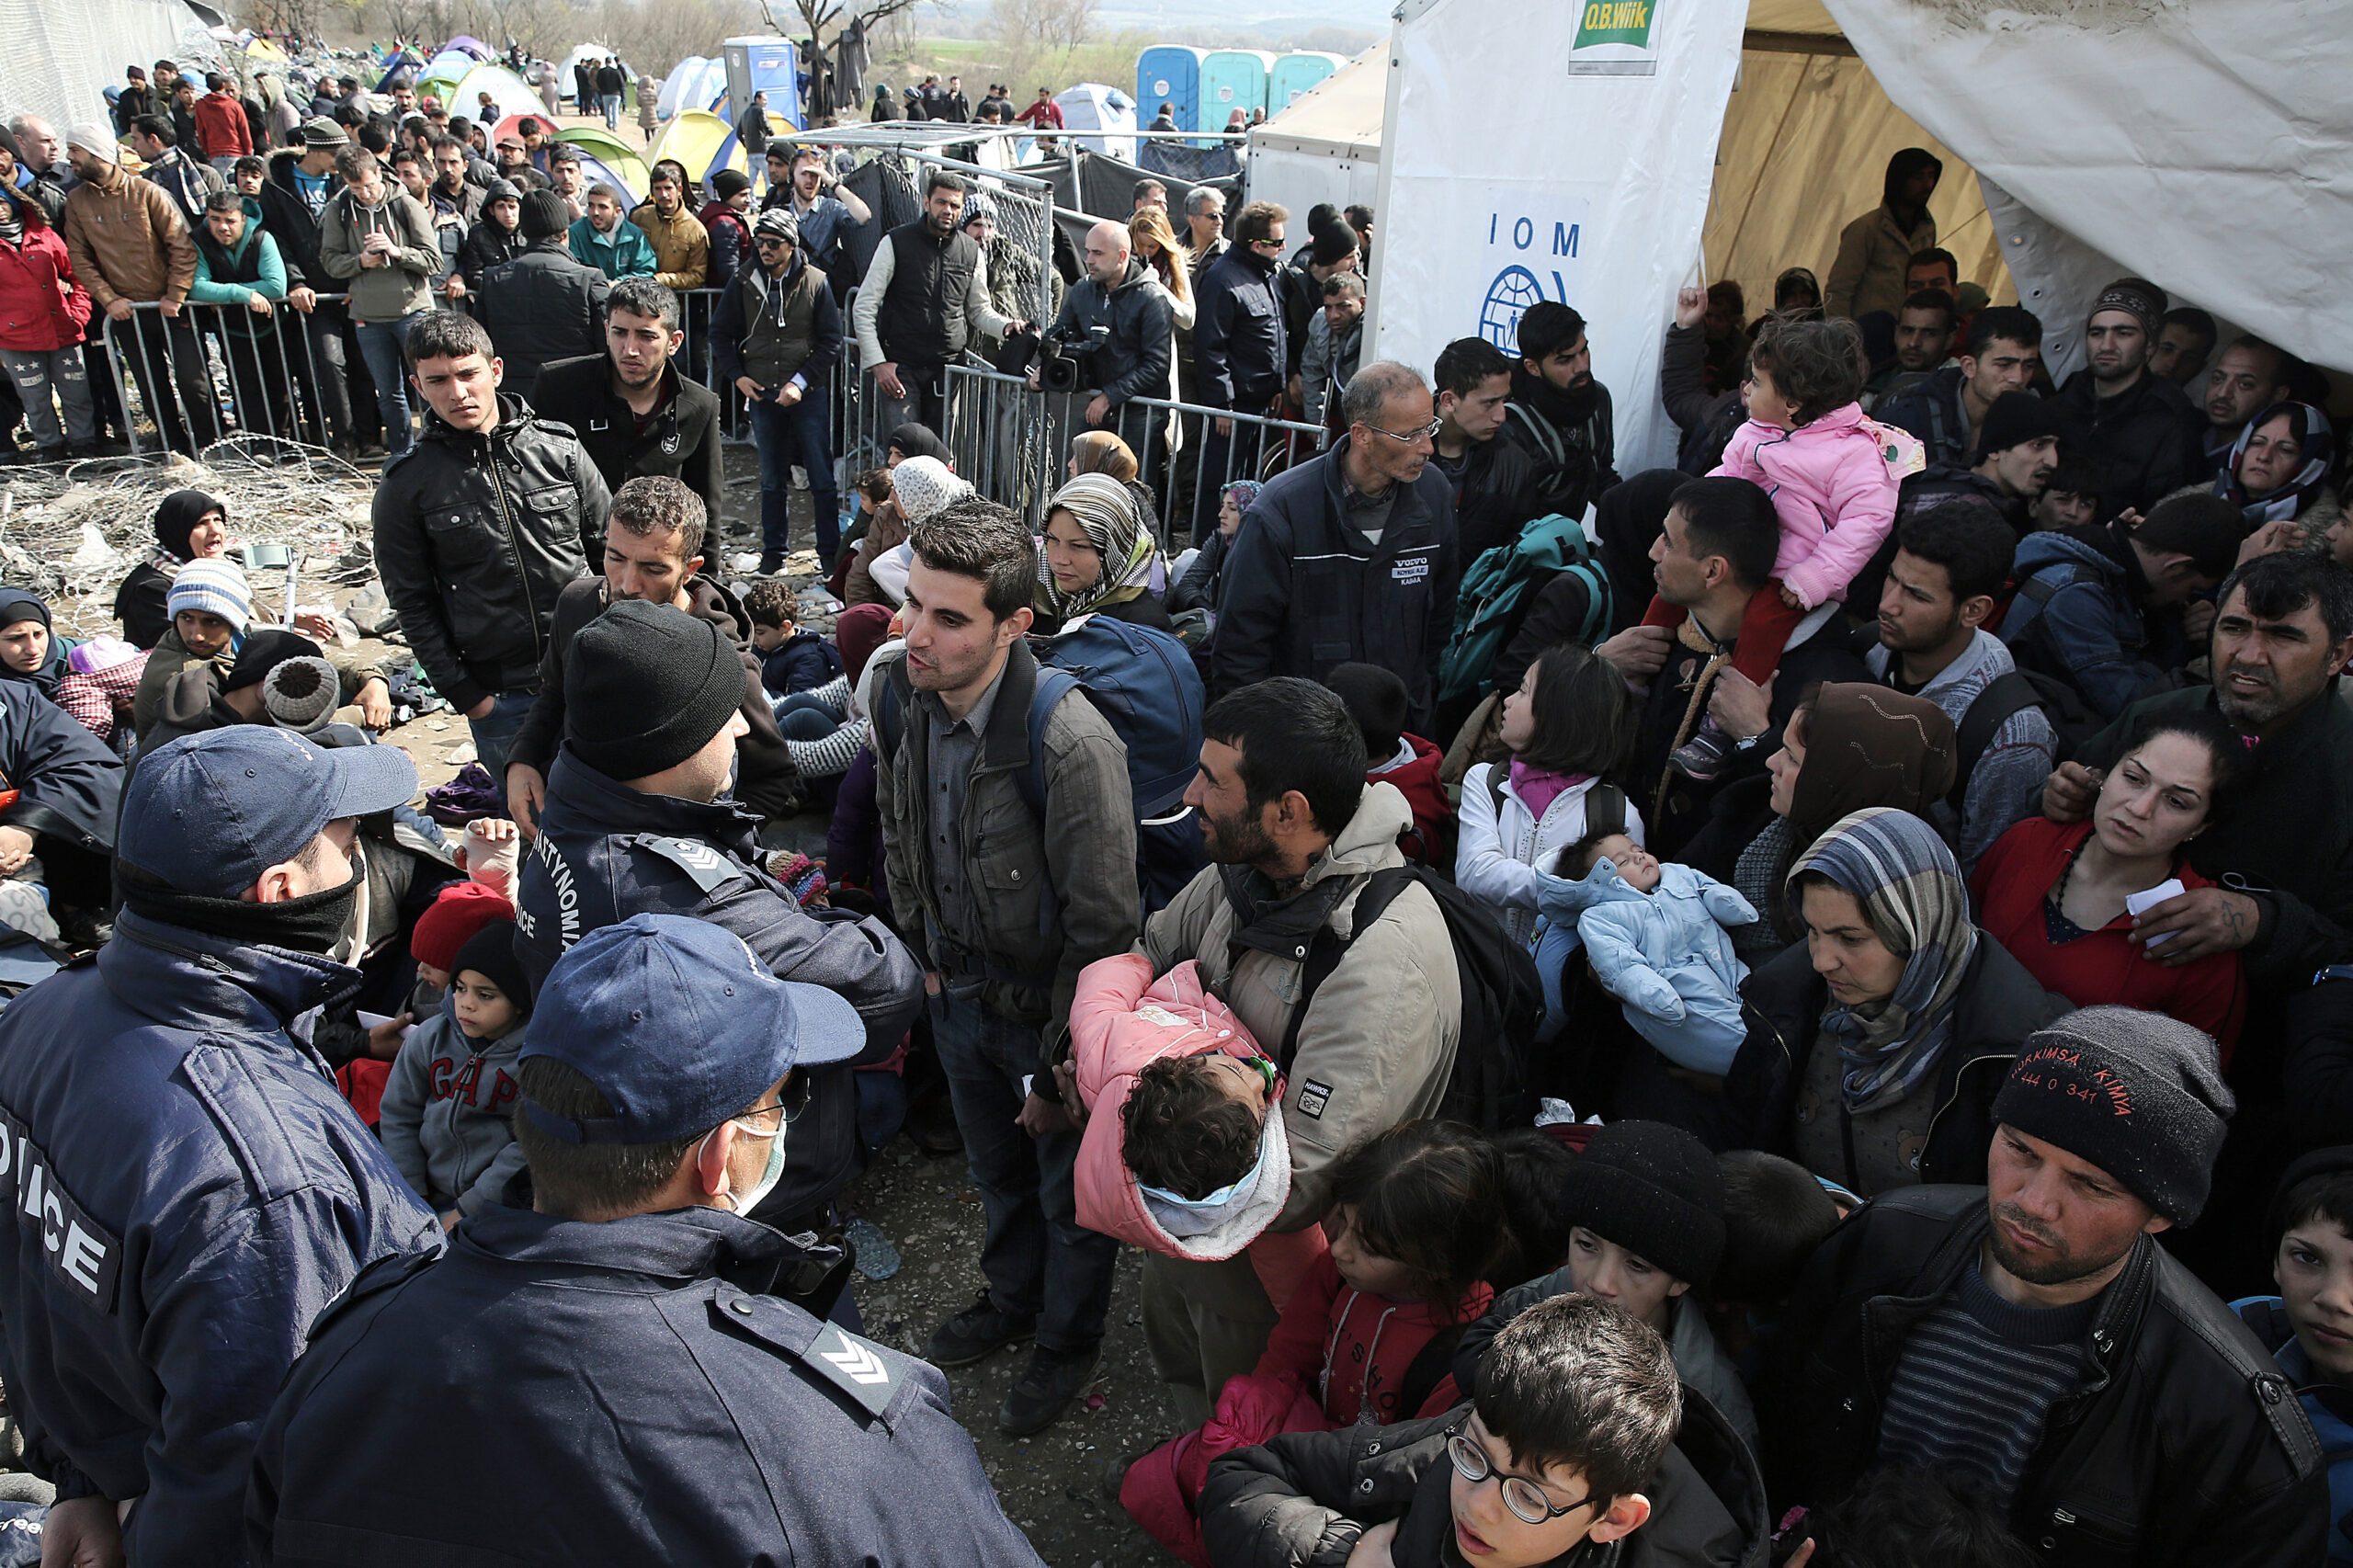 EU unveils 700M-euro migrant aid plan for Greece